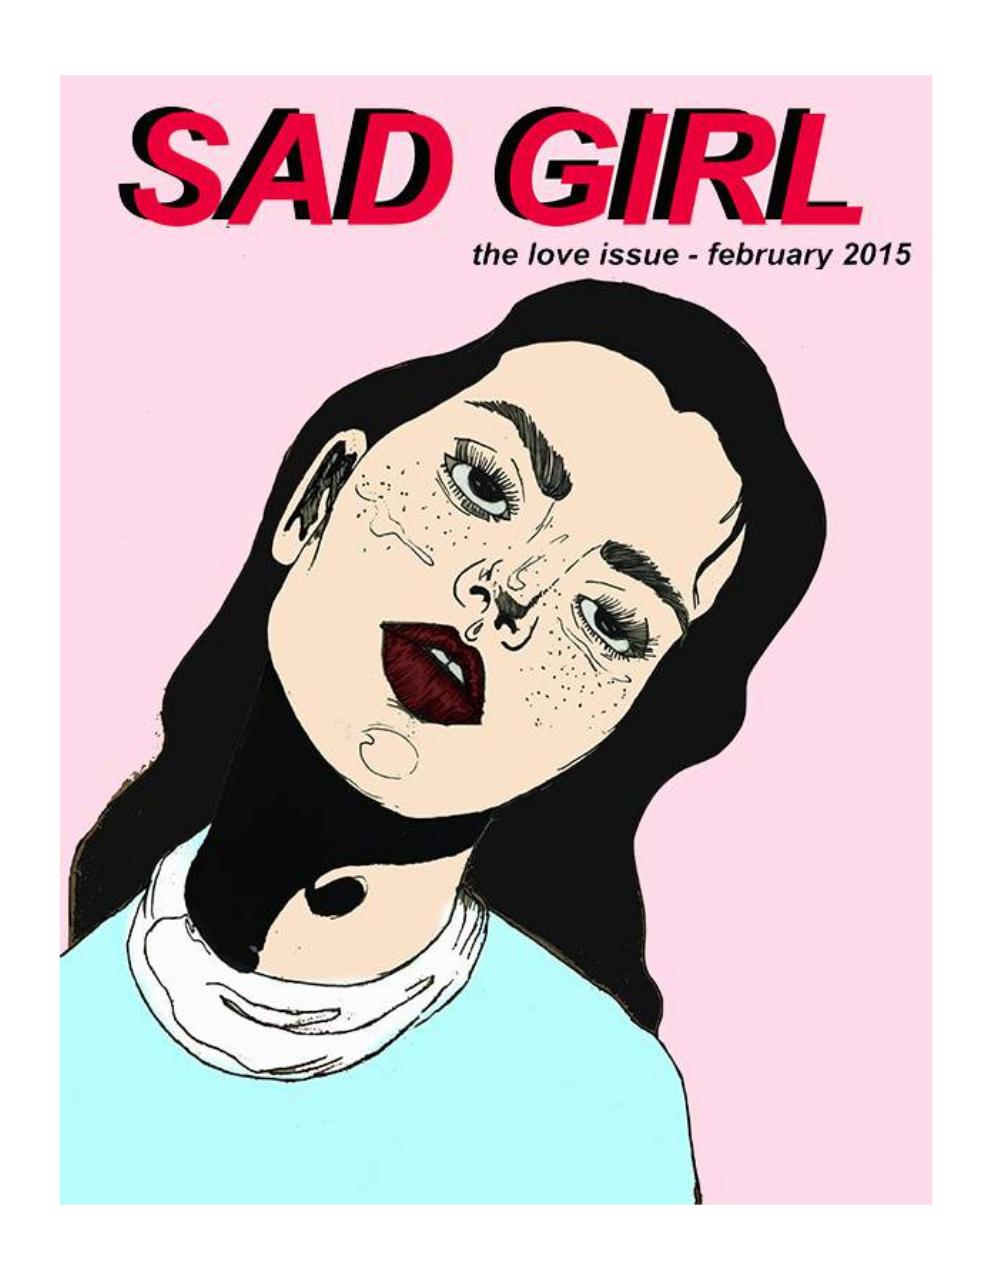 sadgirl - PDF Archive